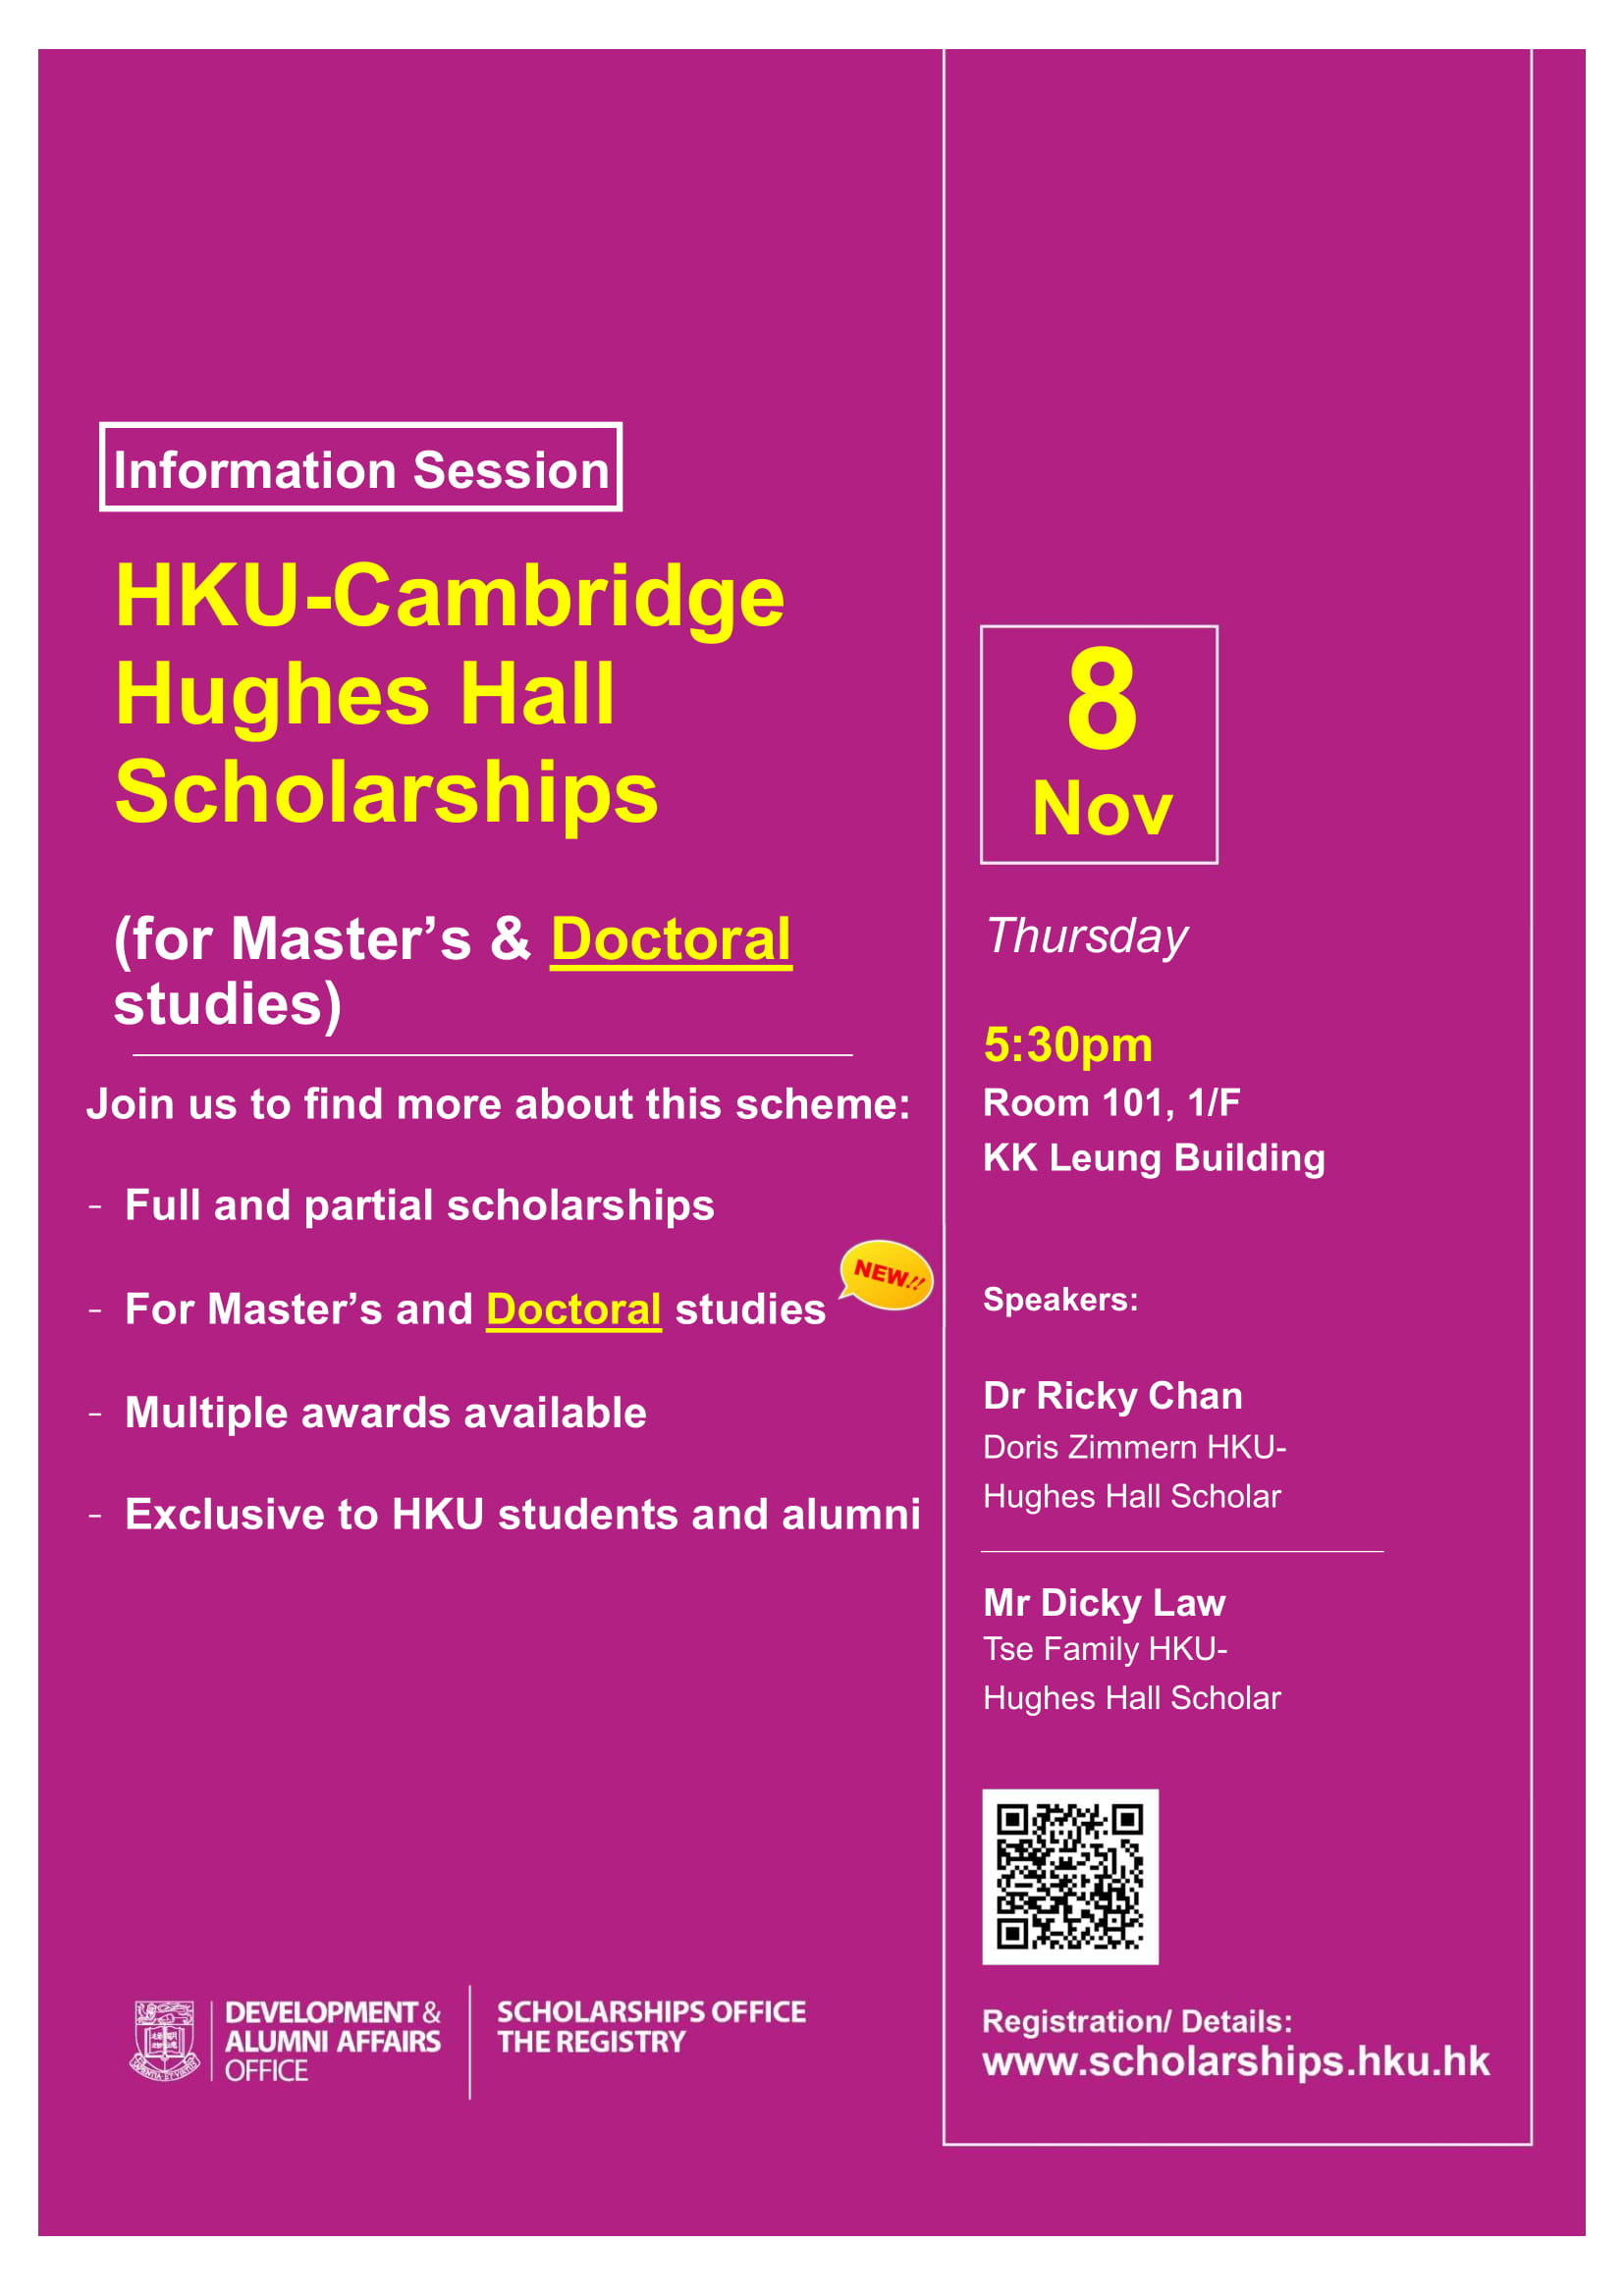 Information Session on HKU-Cambridge Hughes Hall Scholarships